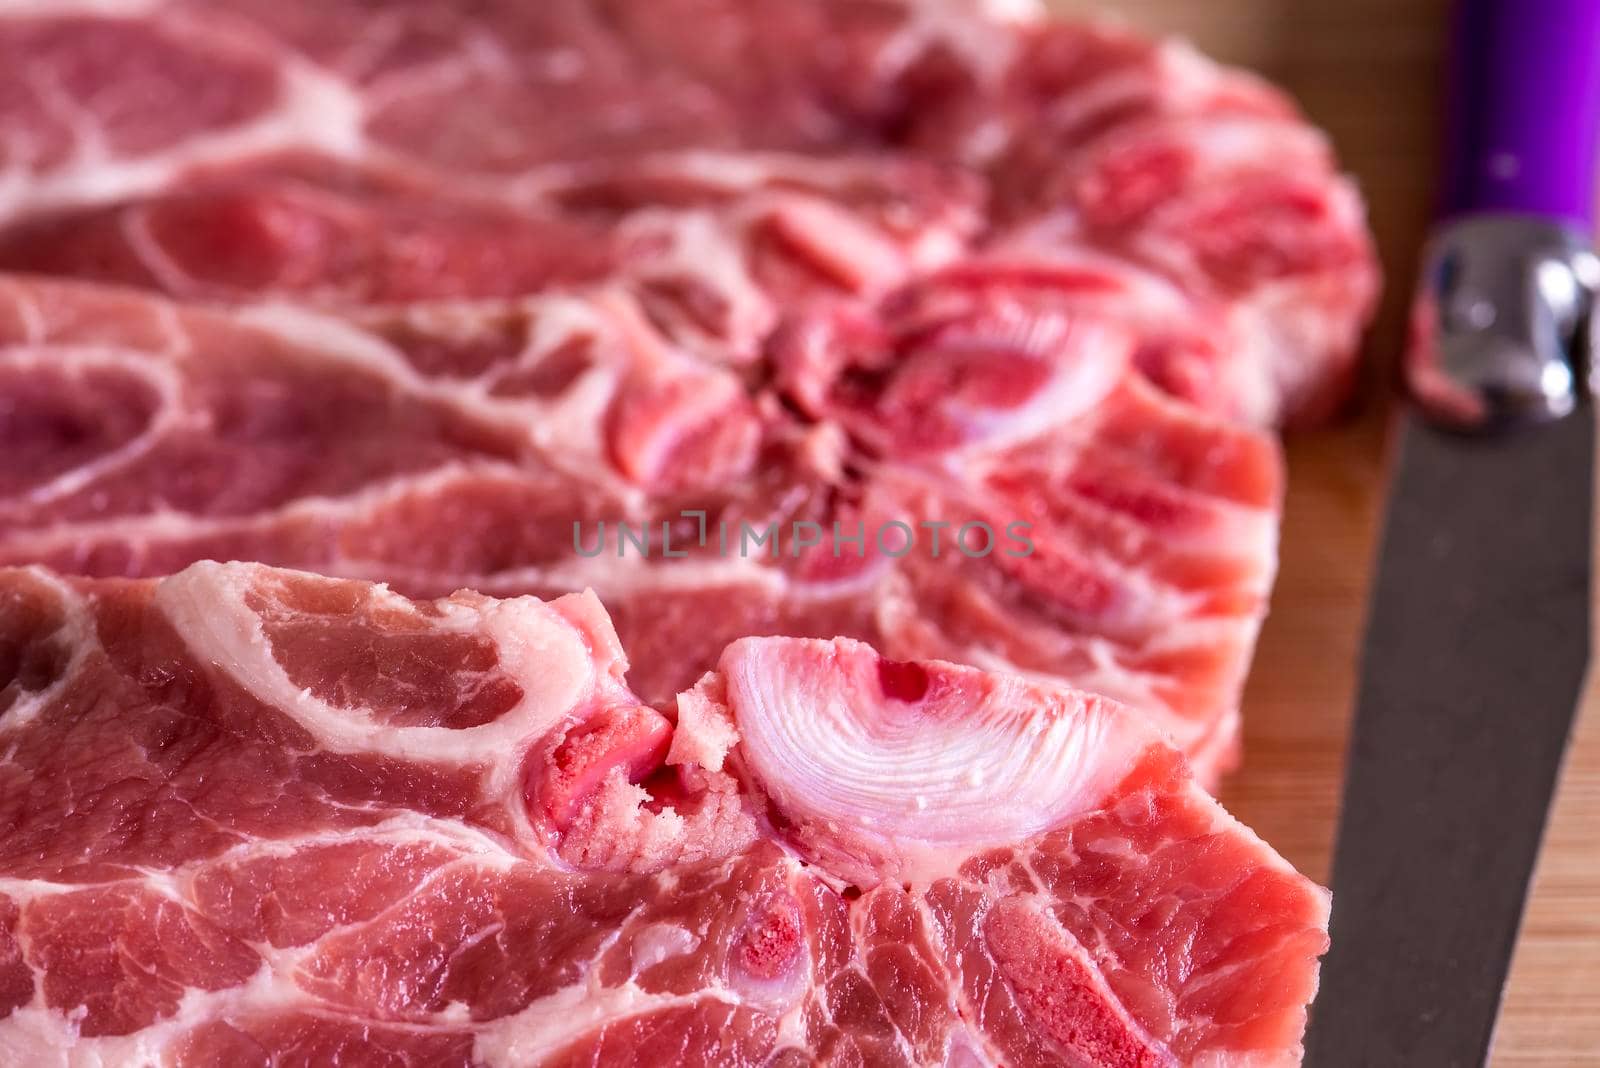 raw pork chop in a closeup by Jochen